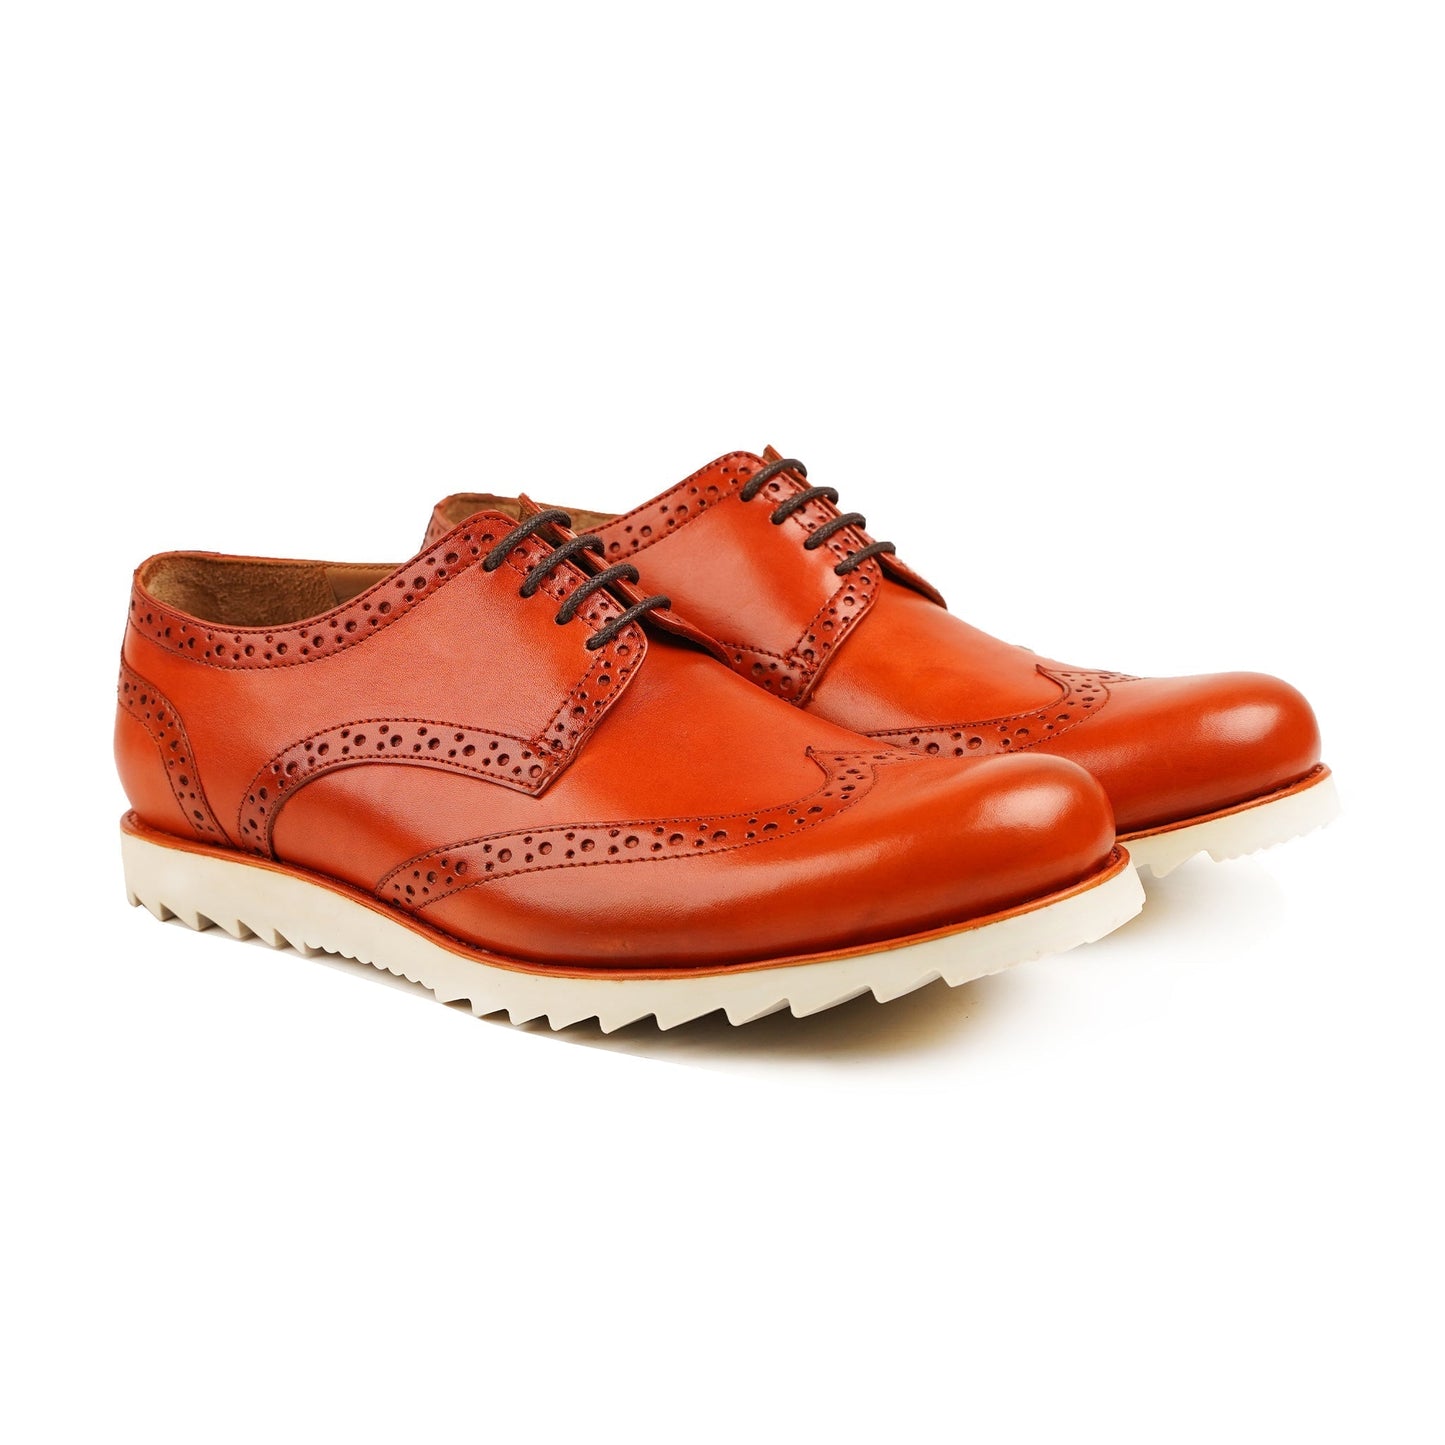 Men's Oxfords & Derby Shoes Derby Boots, derby shoes, derby shoes men, Leather Boots